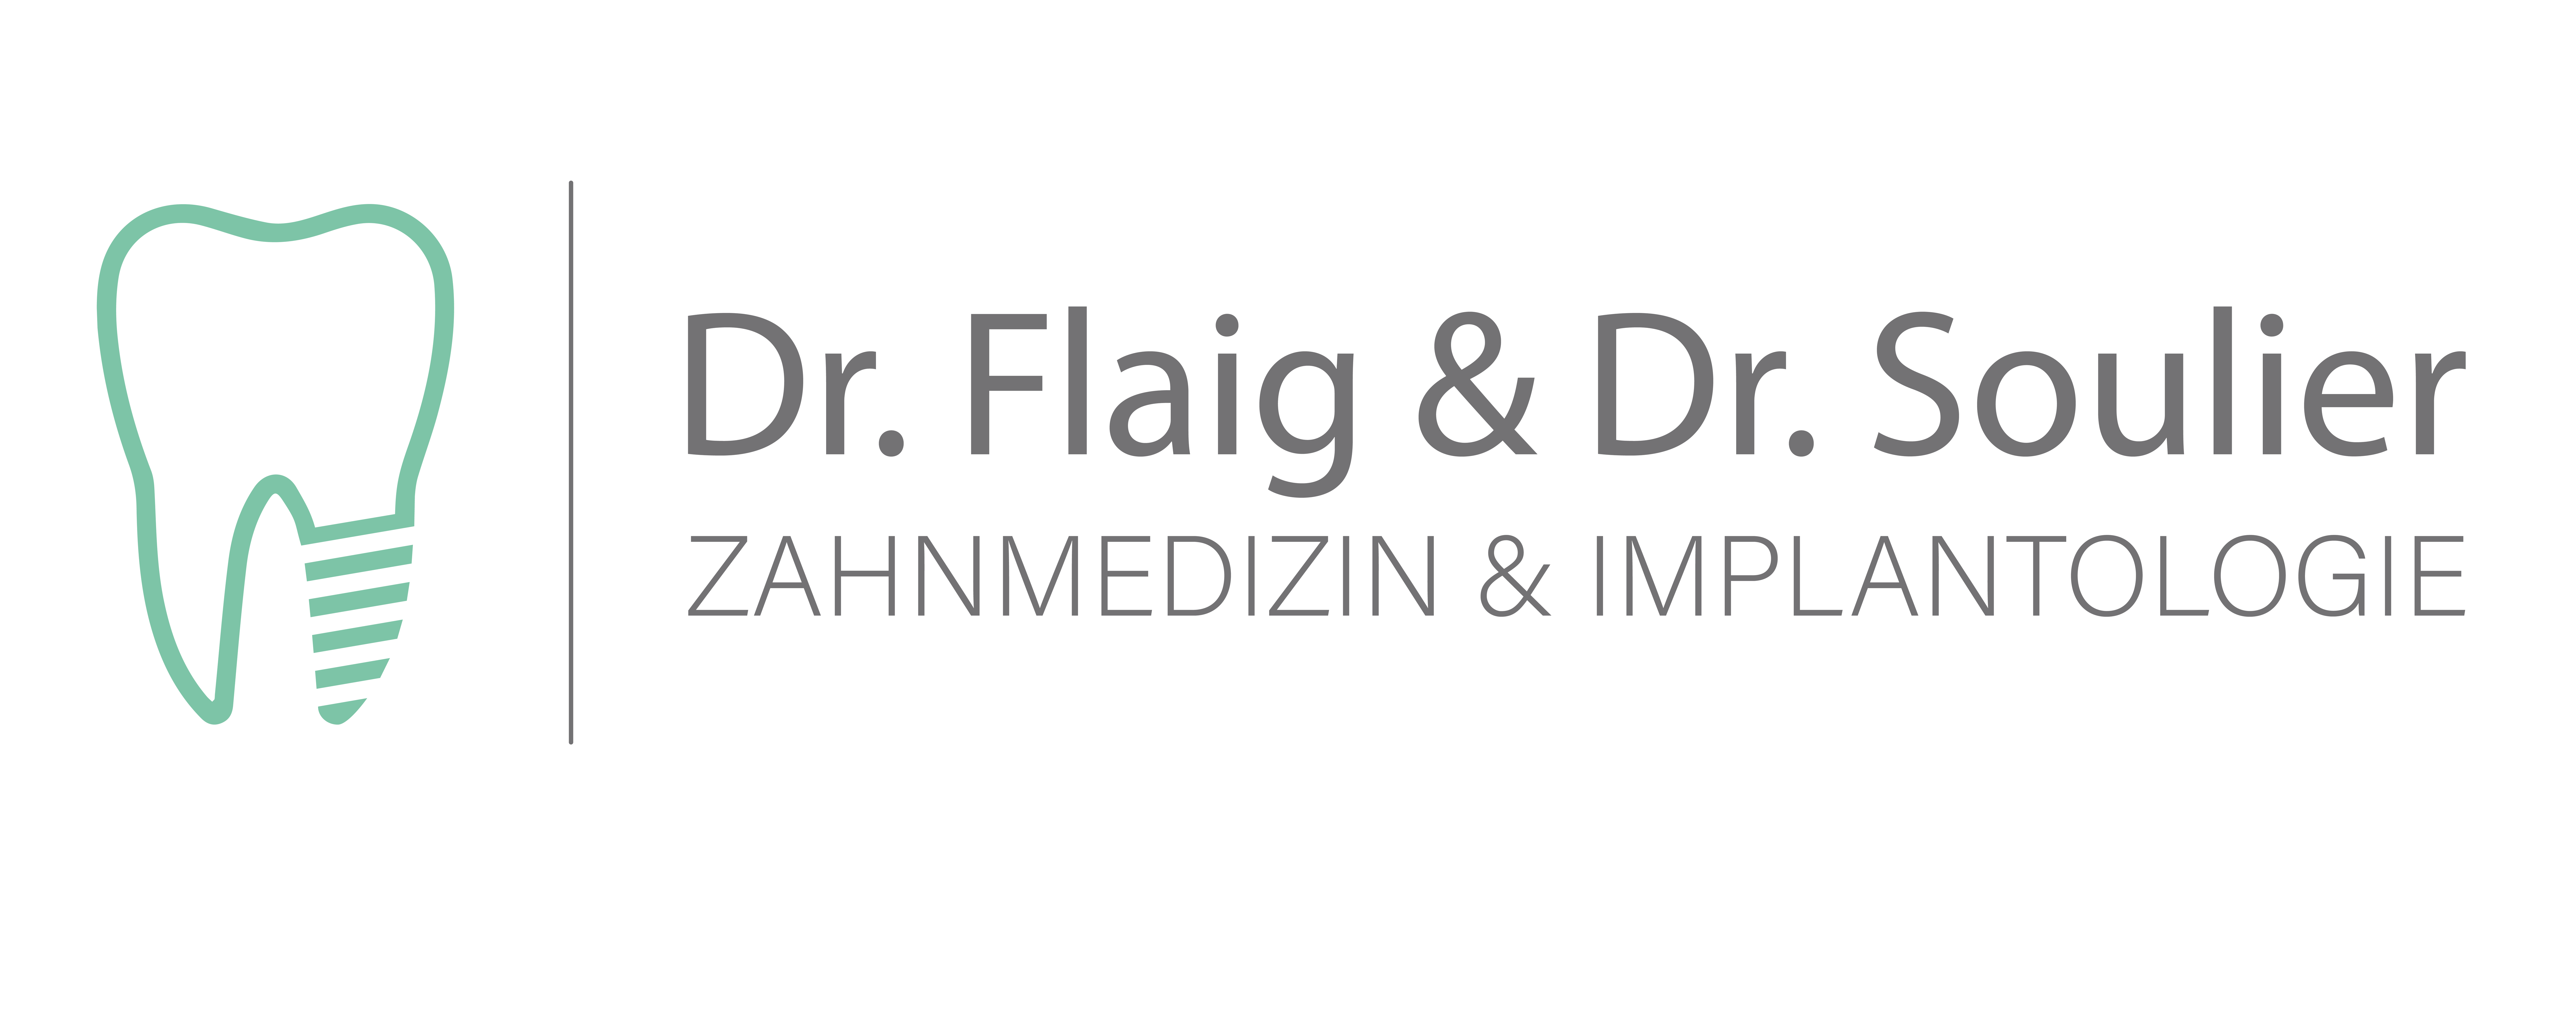 Praxis Dr. Flaig & Dr. Soulier